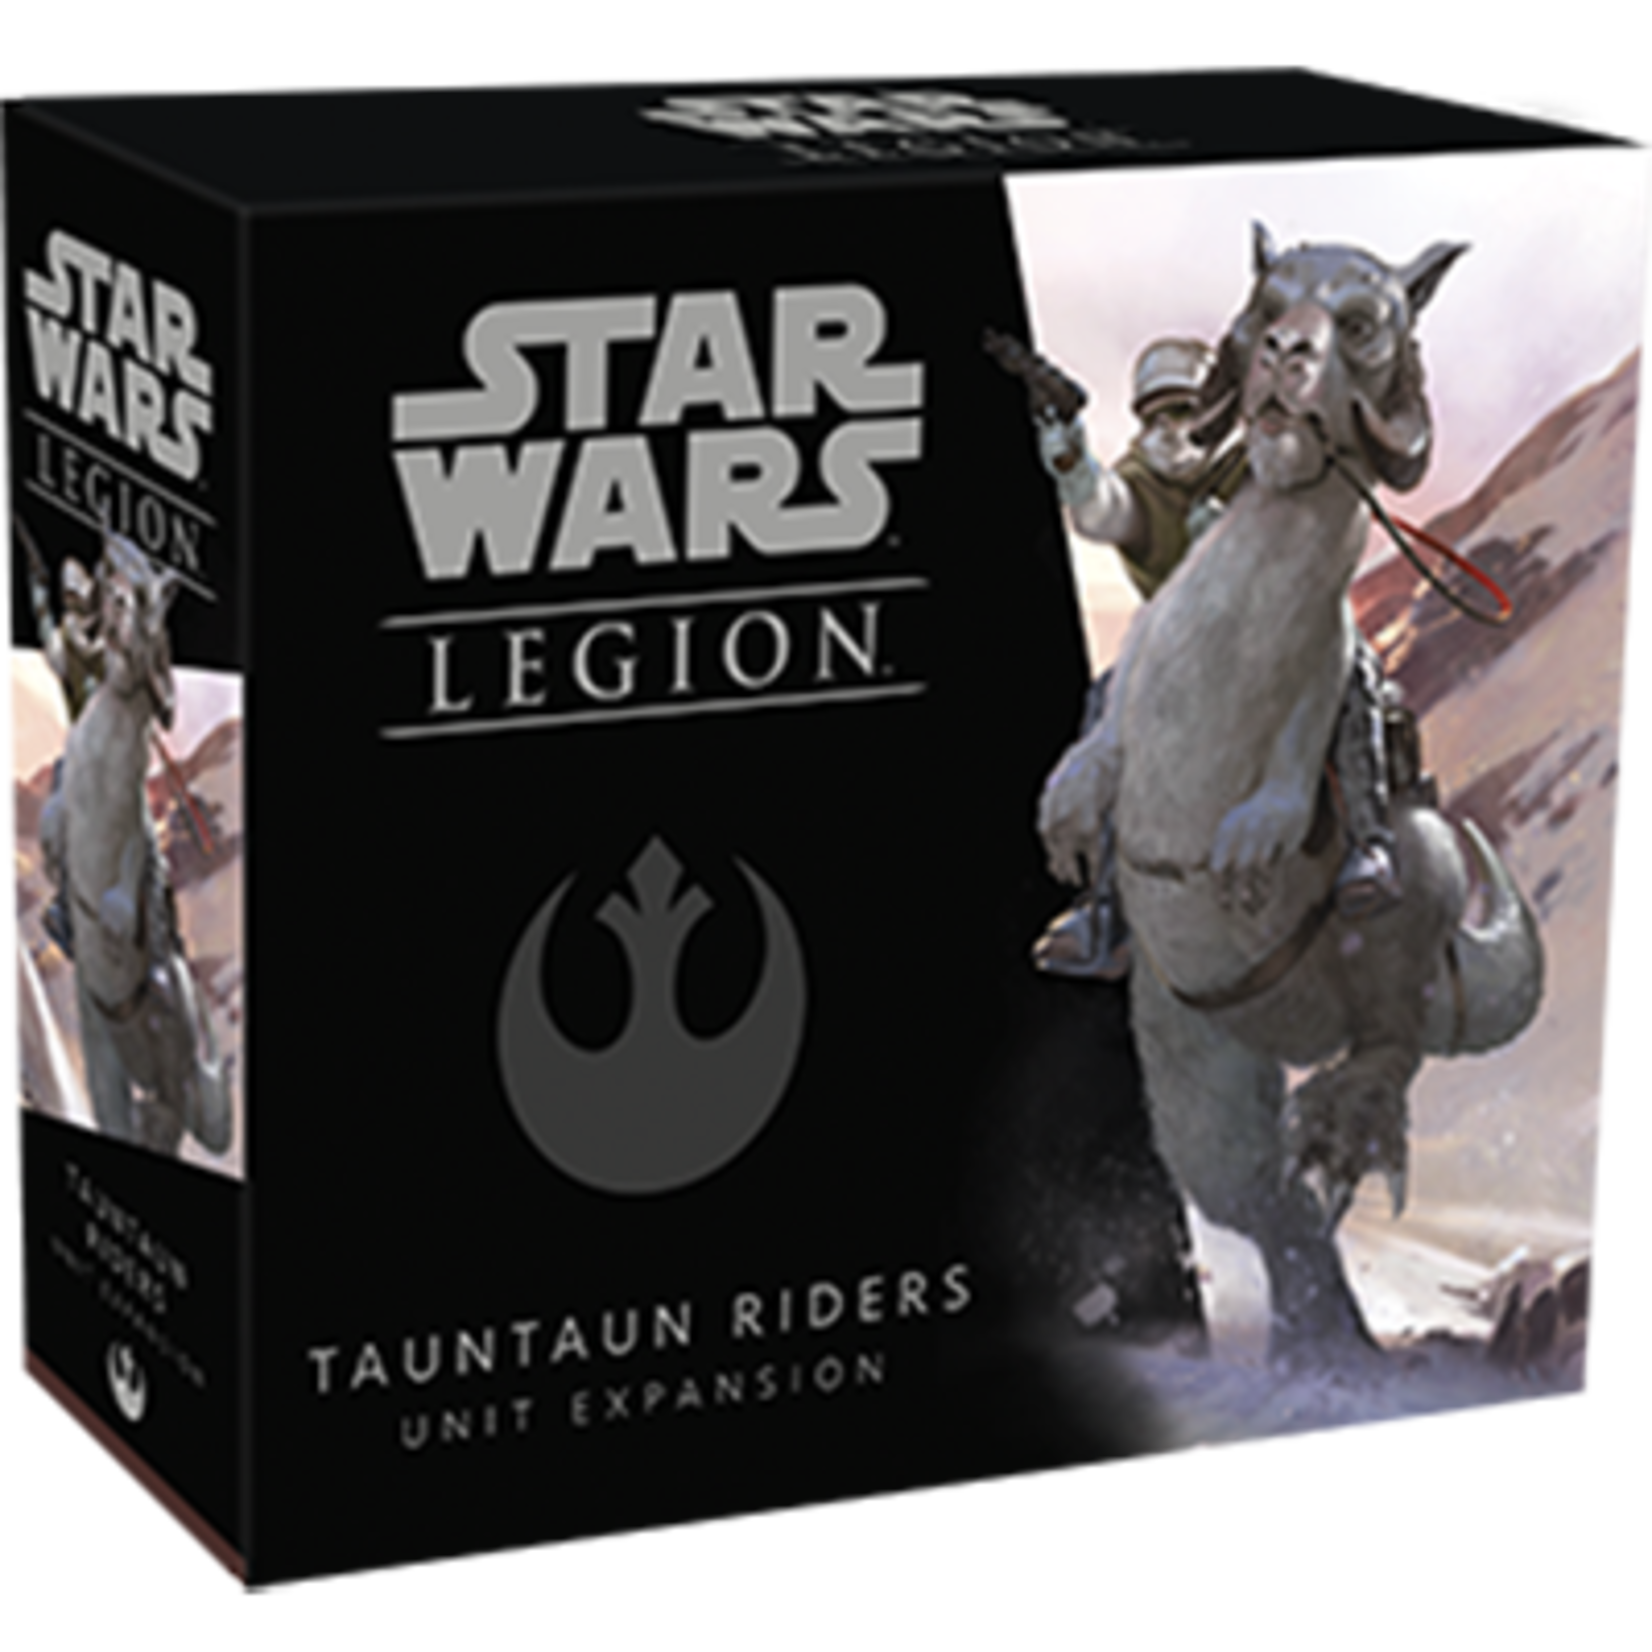 Stars Wars: Legion Tauntaun Riders